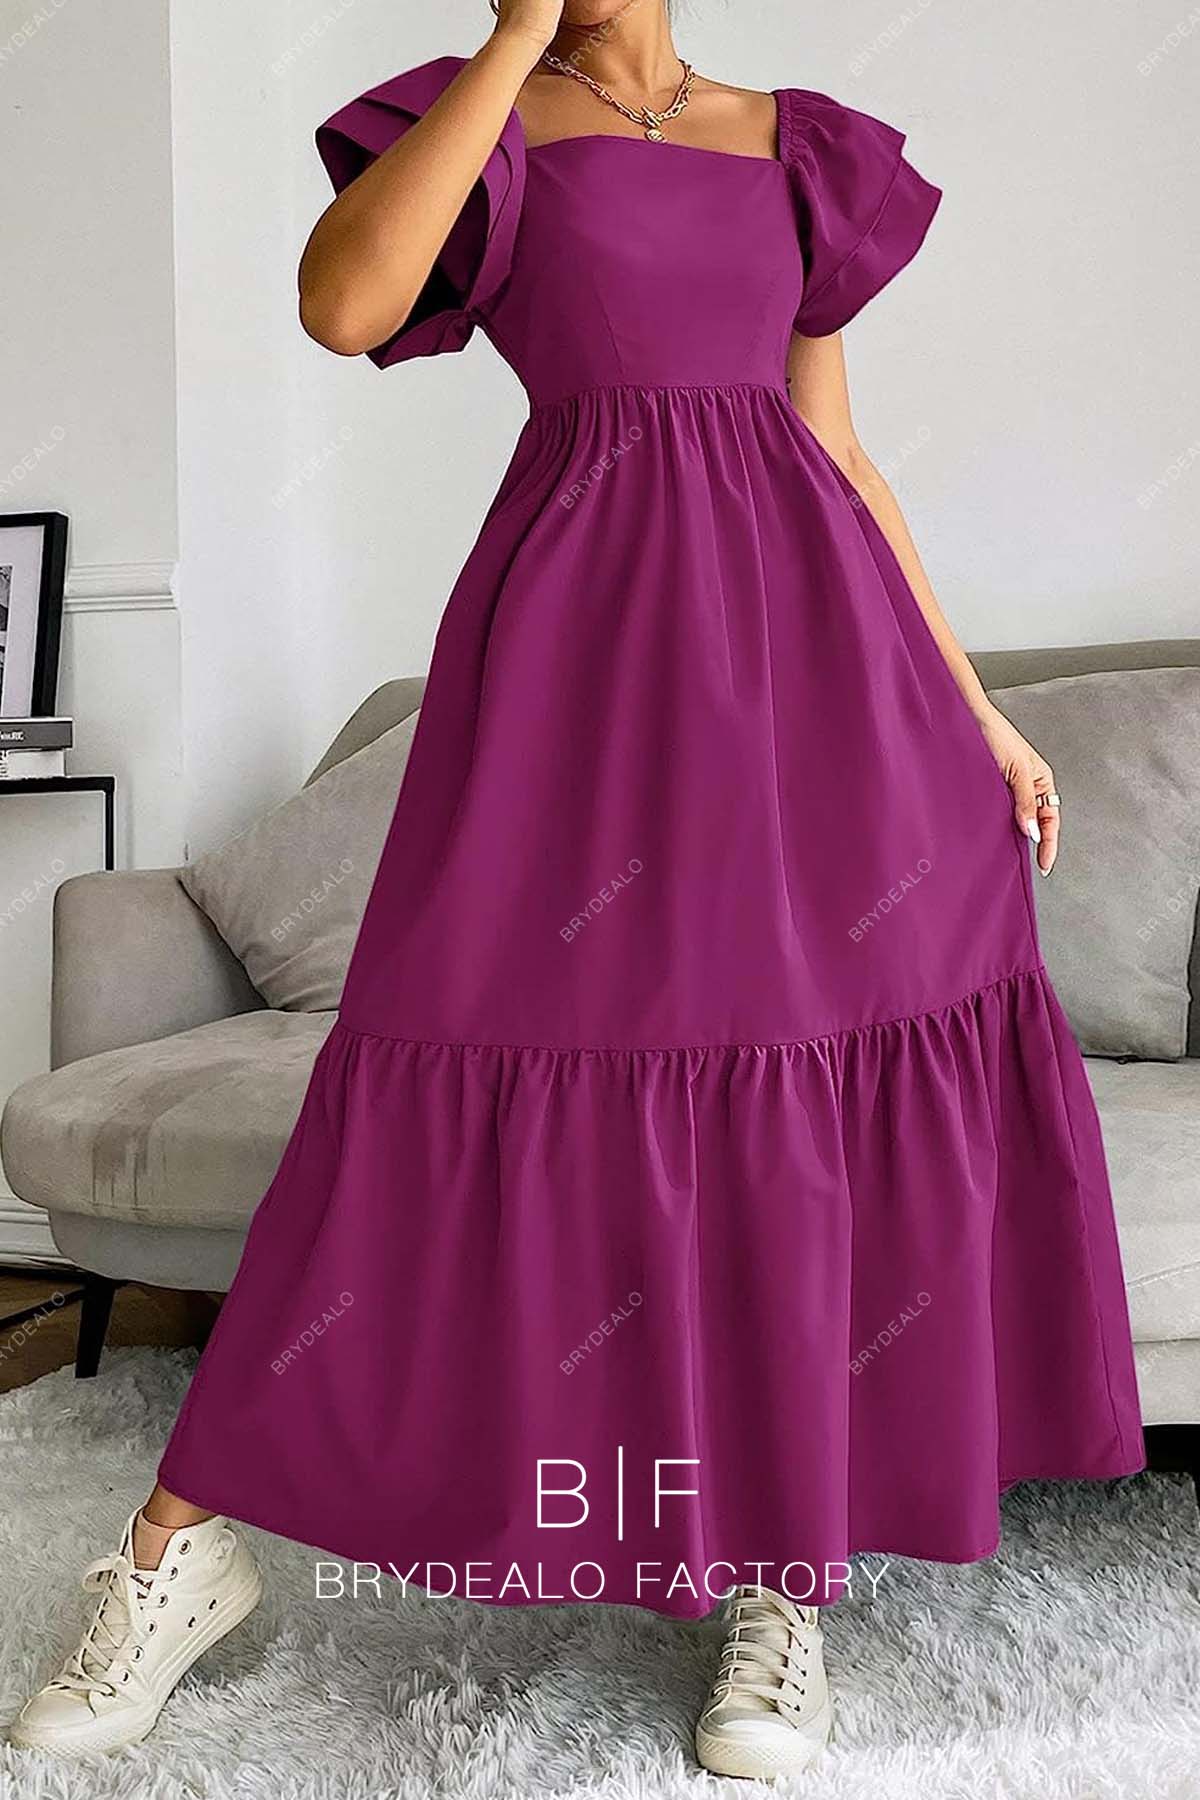 Layered Sleeves Raspberry Tea Length Homecoming Dress